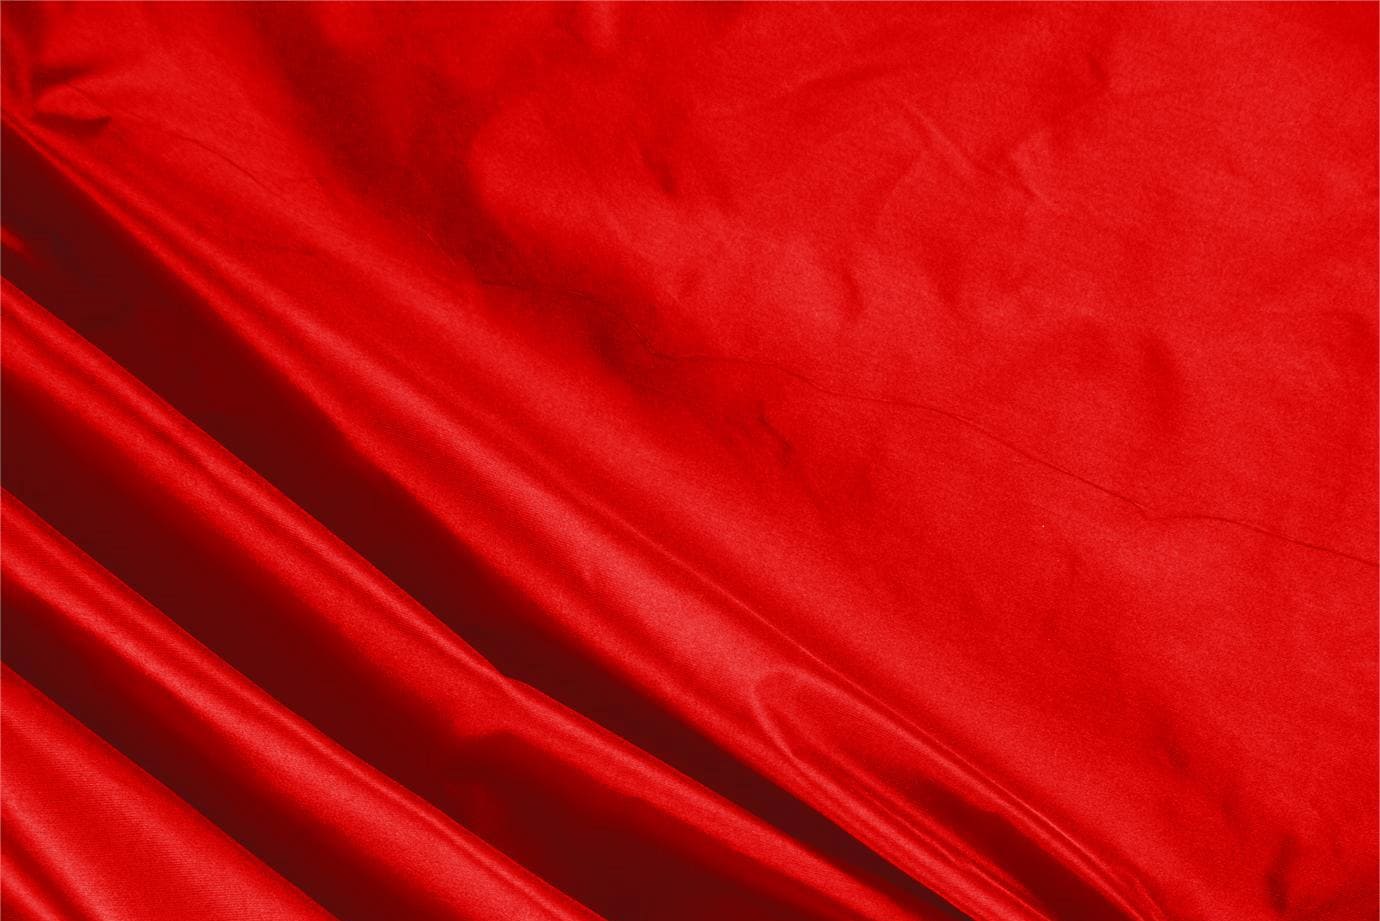 Fire Red Silk Taffeta fabric for dressmaking